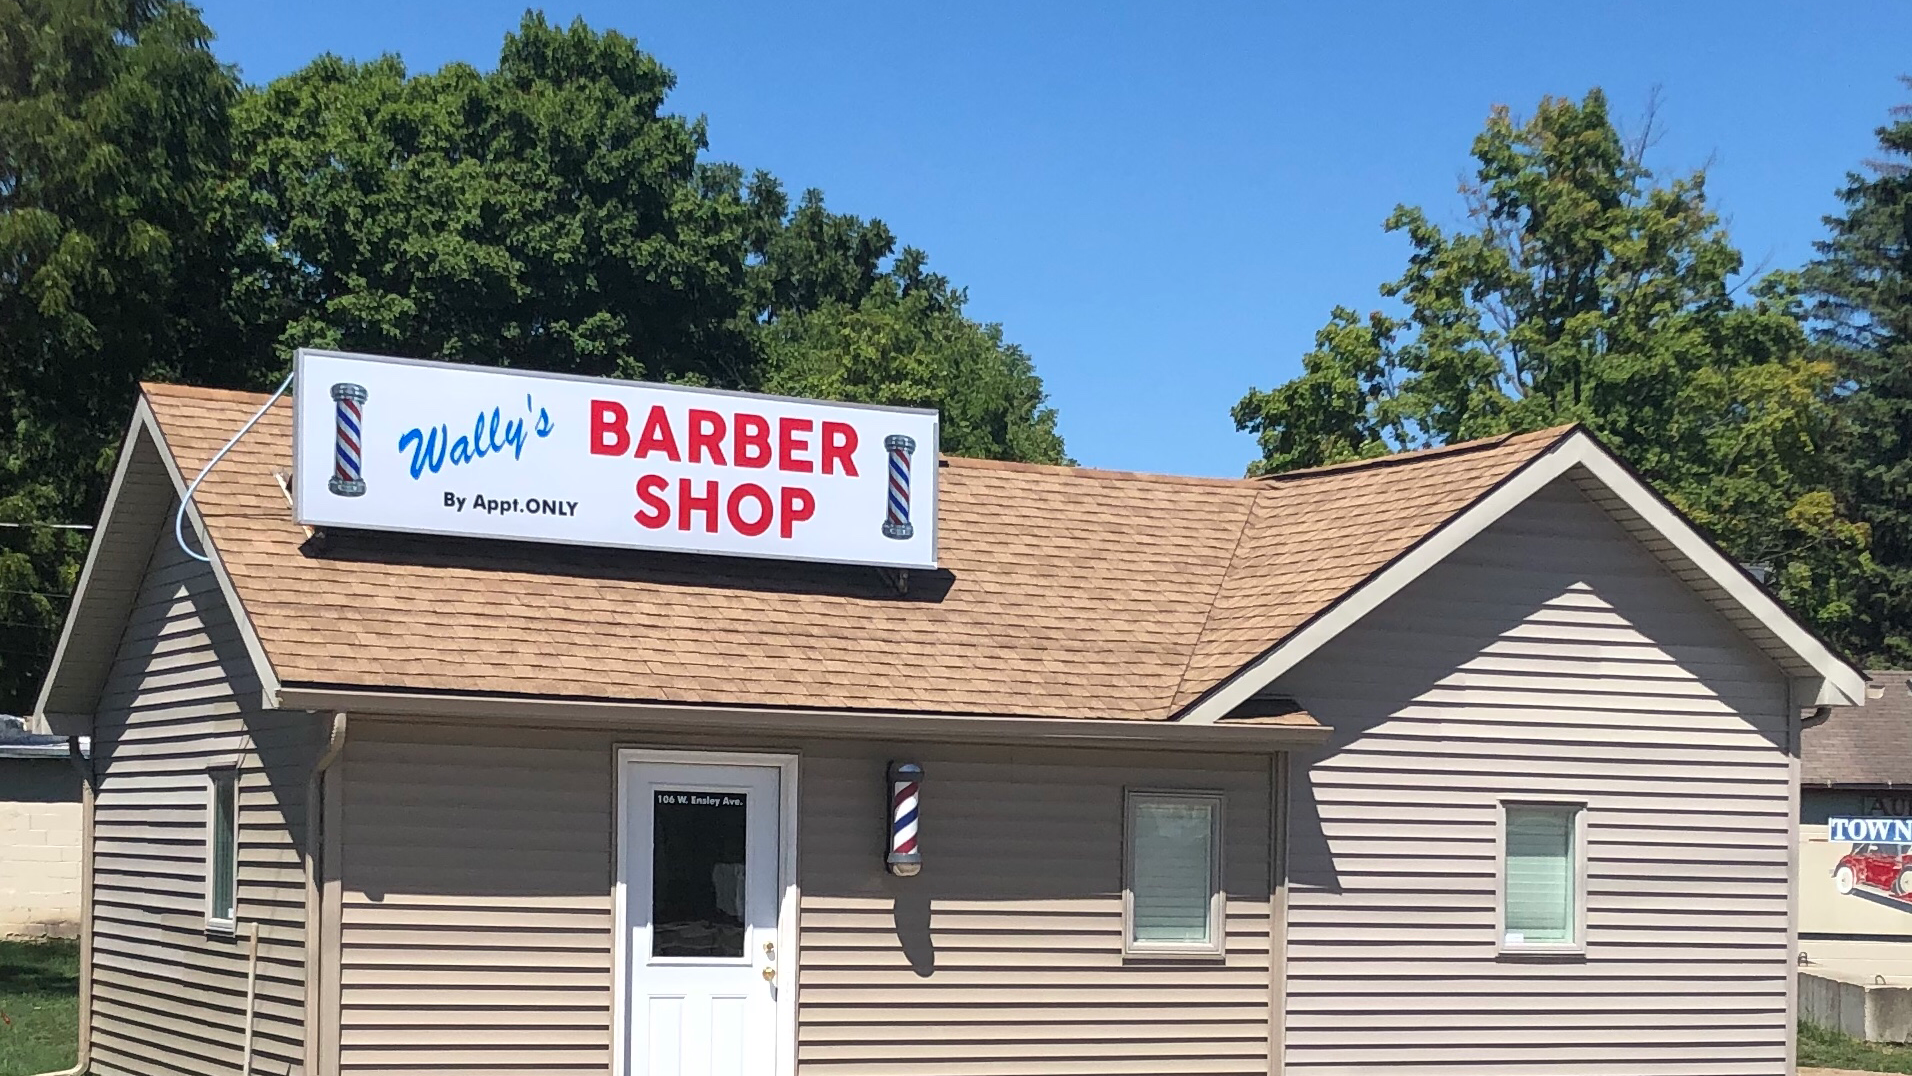 Wally’s Barber Shop